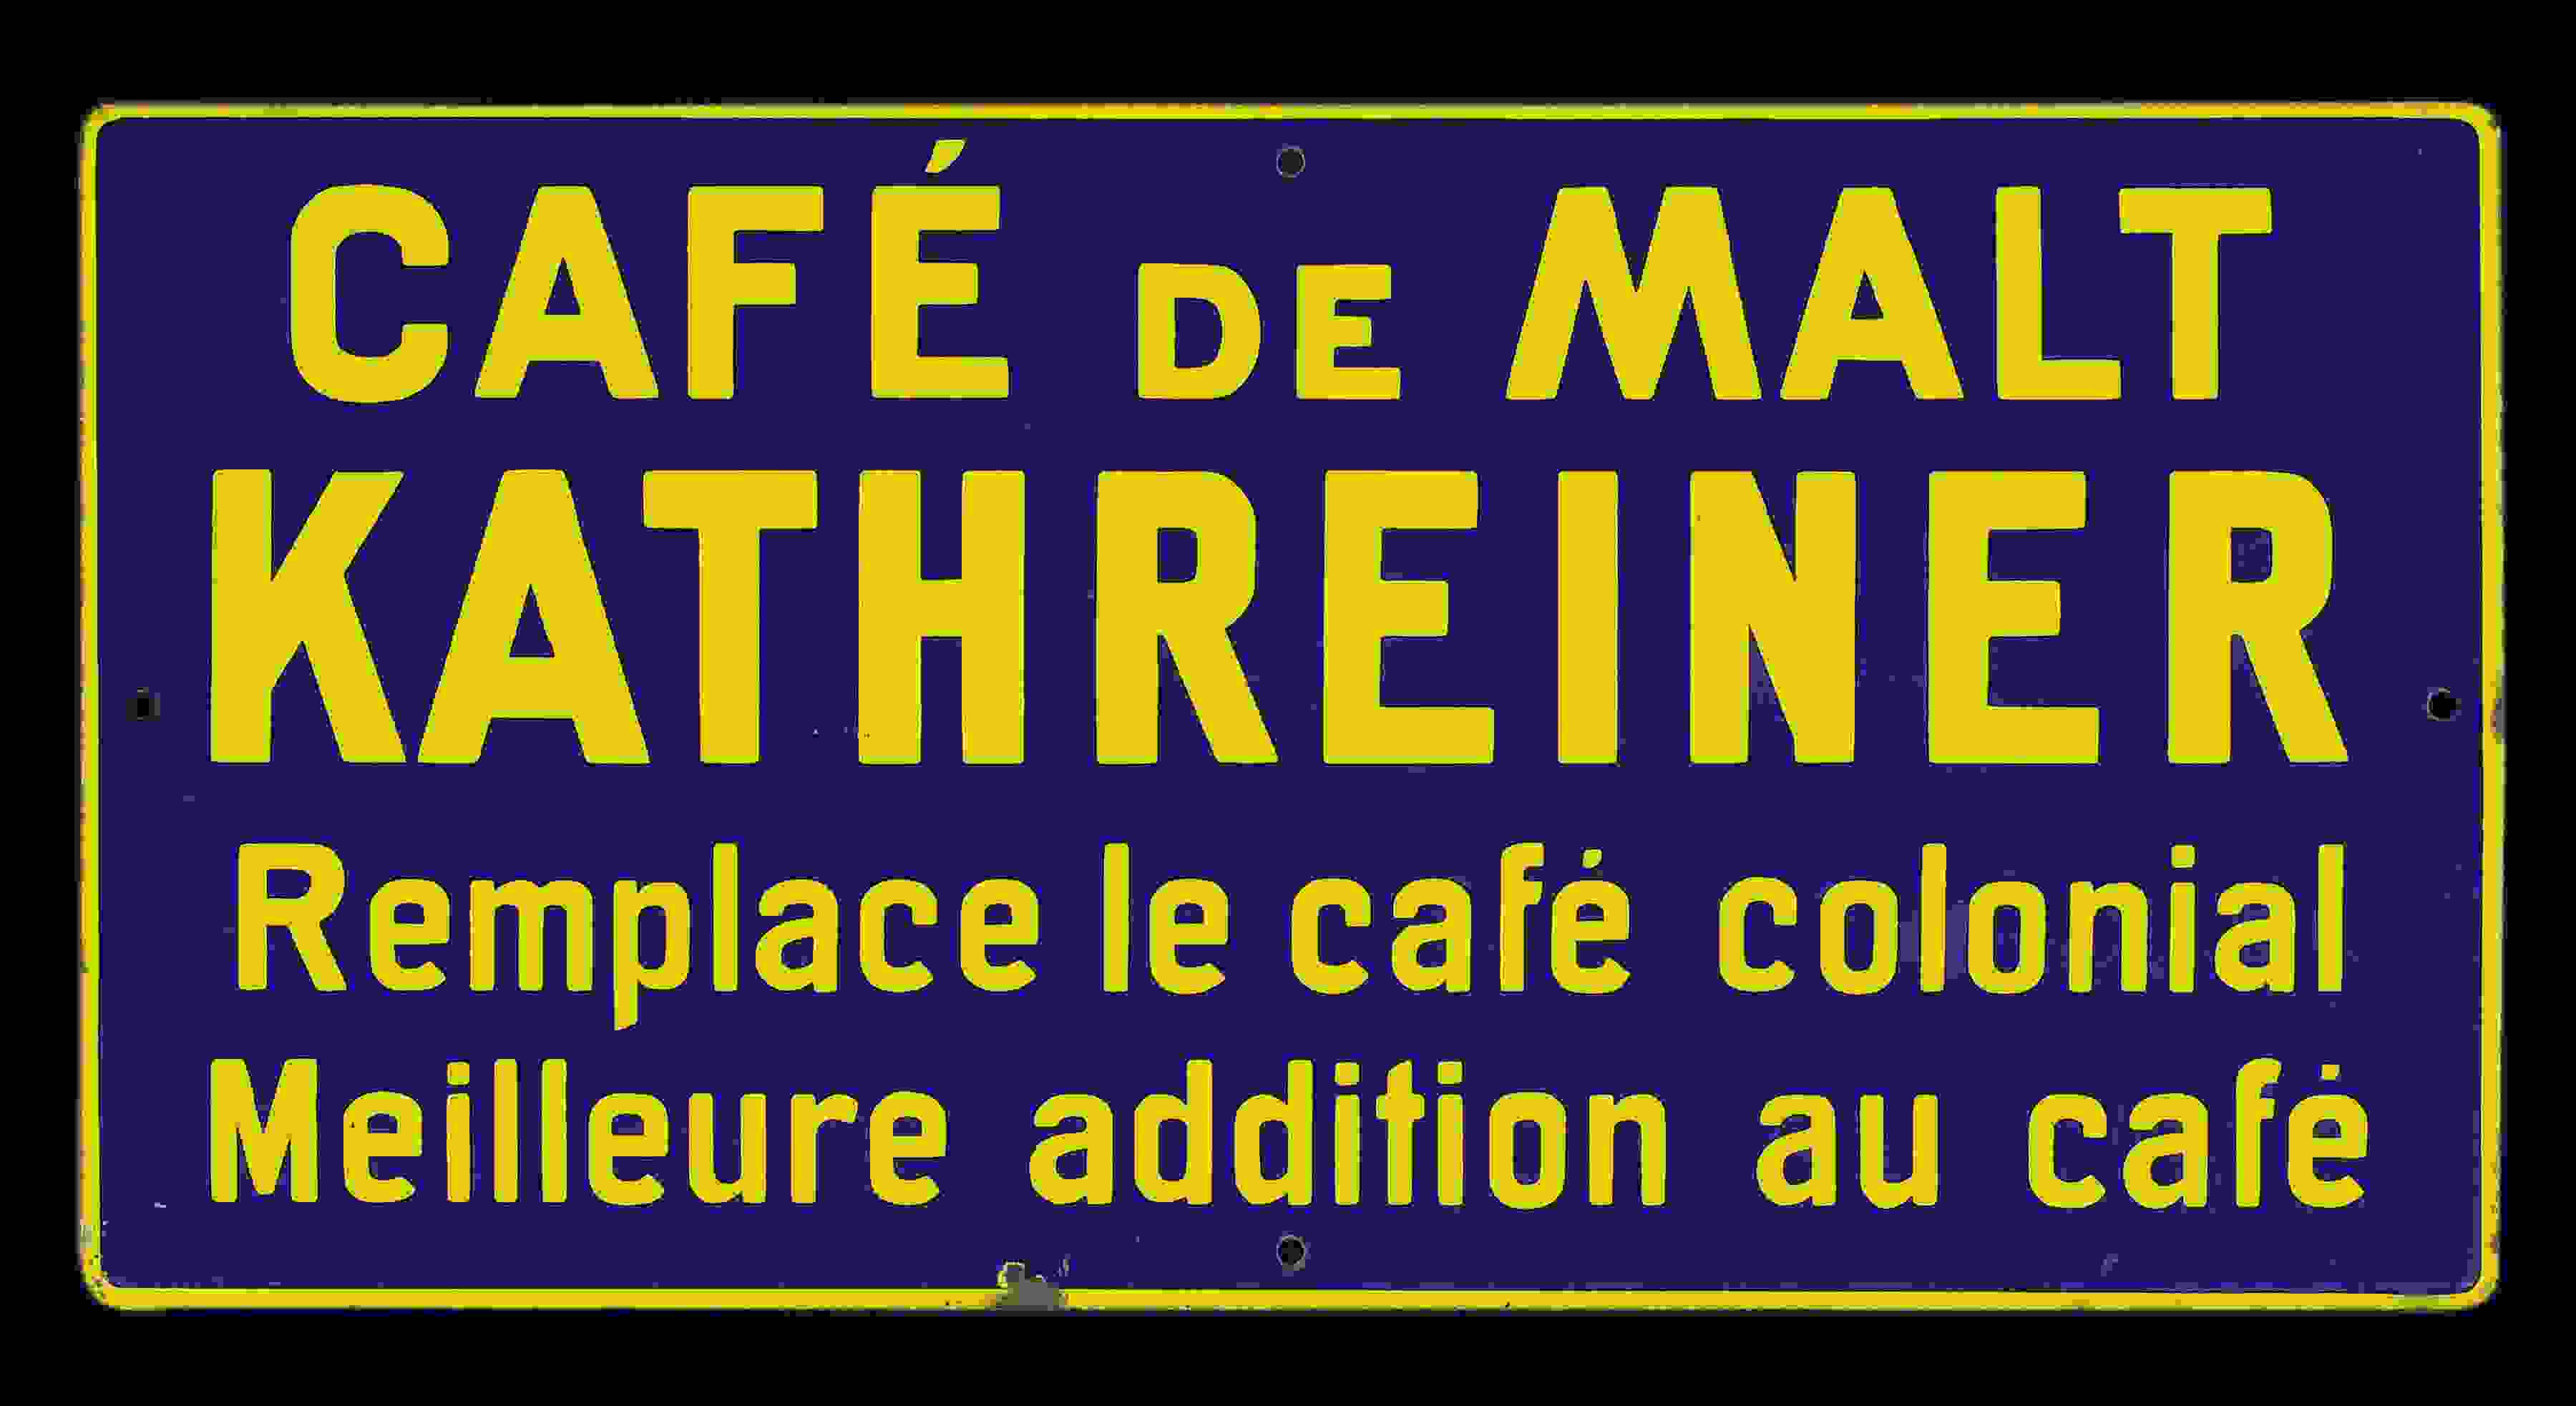 Kathreiner Café de Malt 